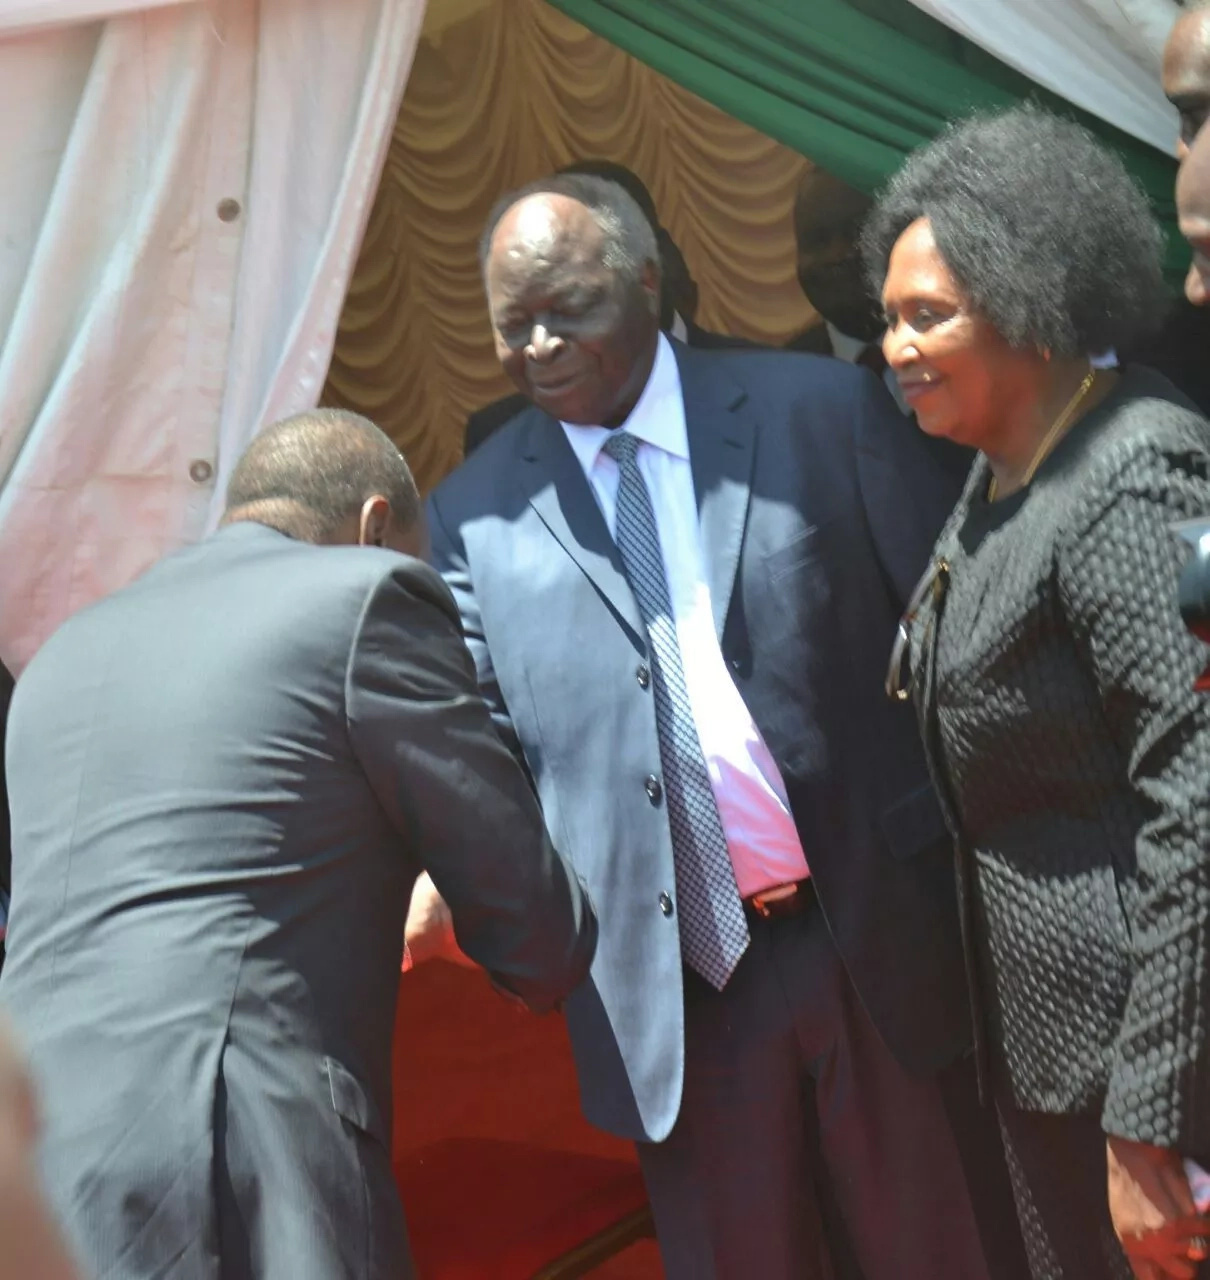 Kibaki's female companion at Nderitu Gachagua's raises eyebrows